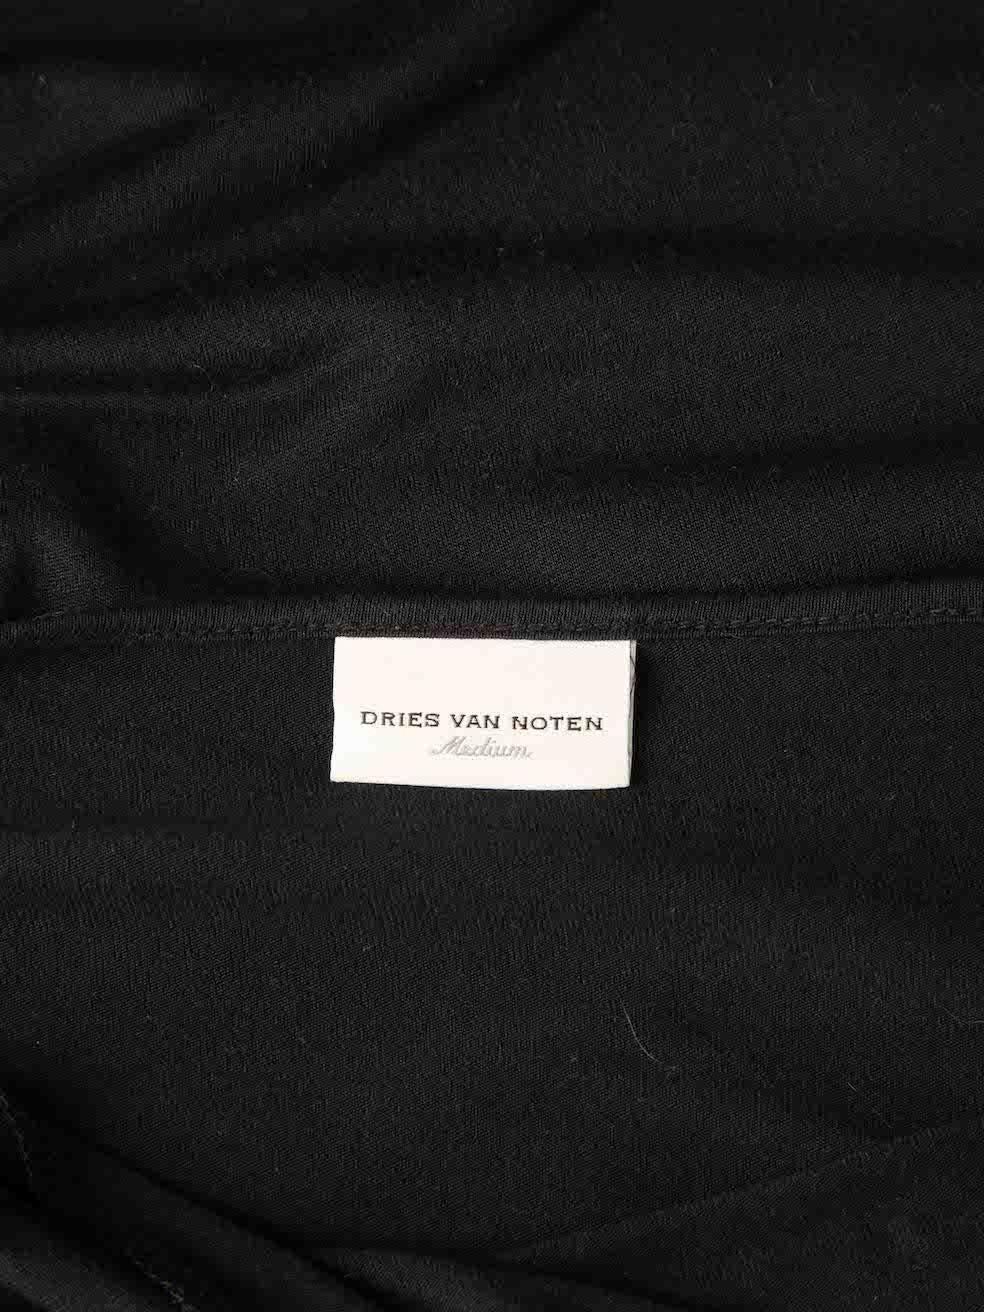 Women's Dries van Noten Black Bateau Neck Mid Sleeves Top Size M For Sale